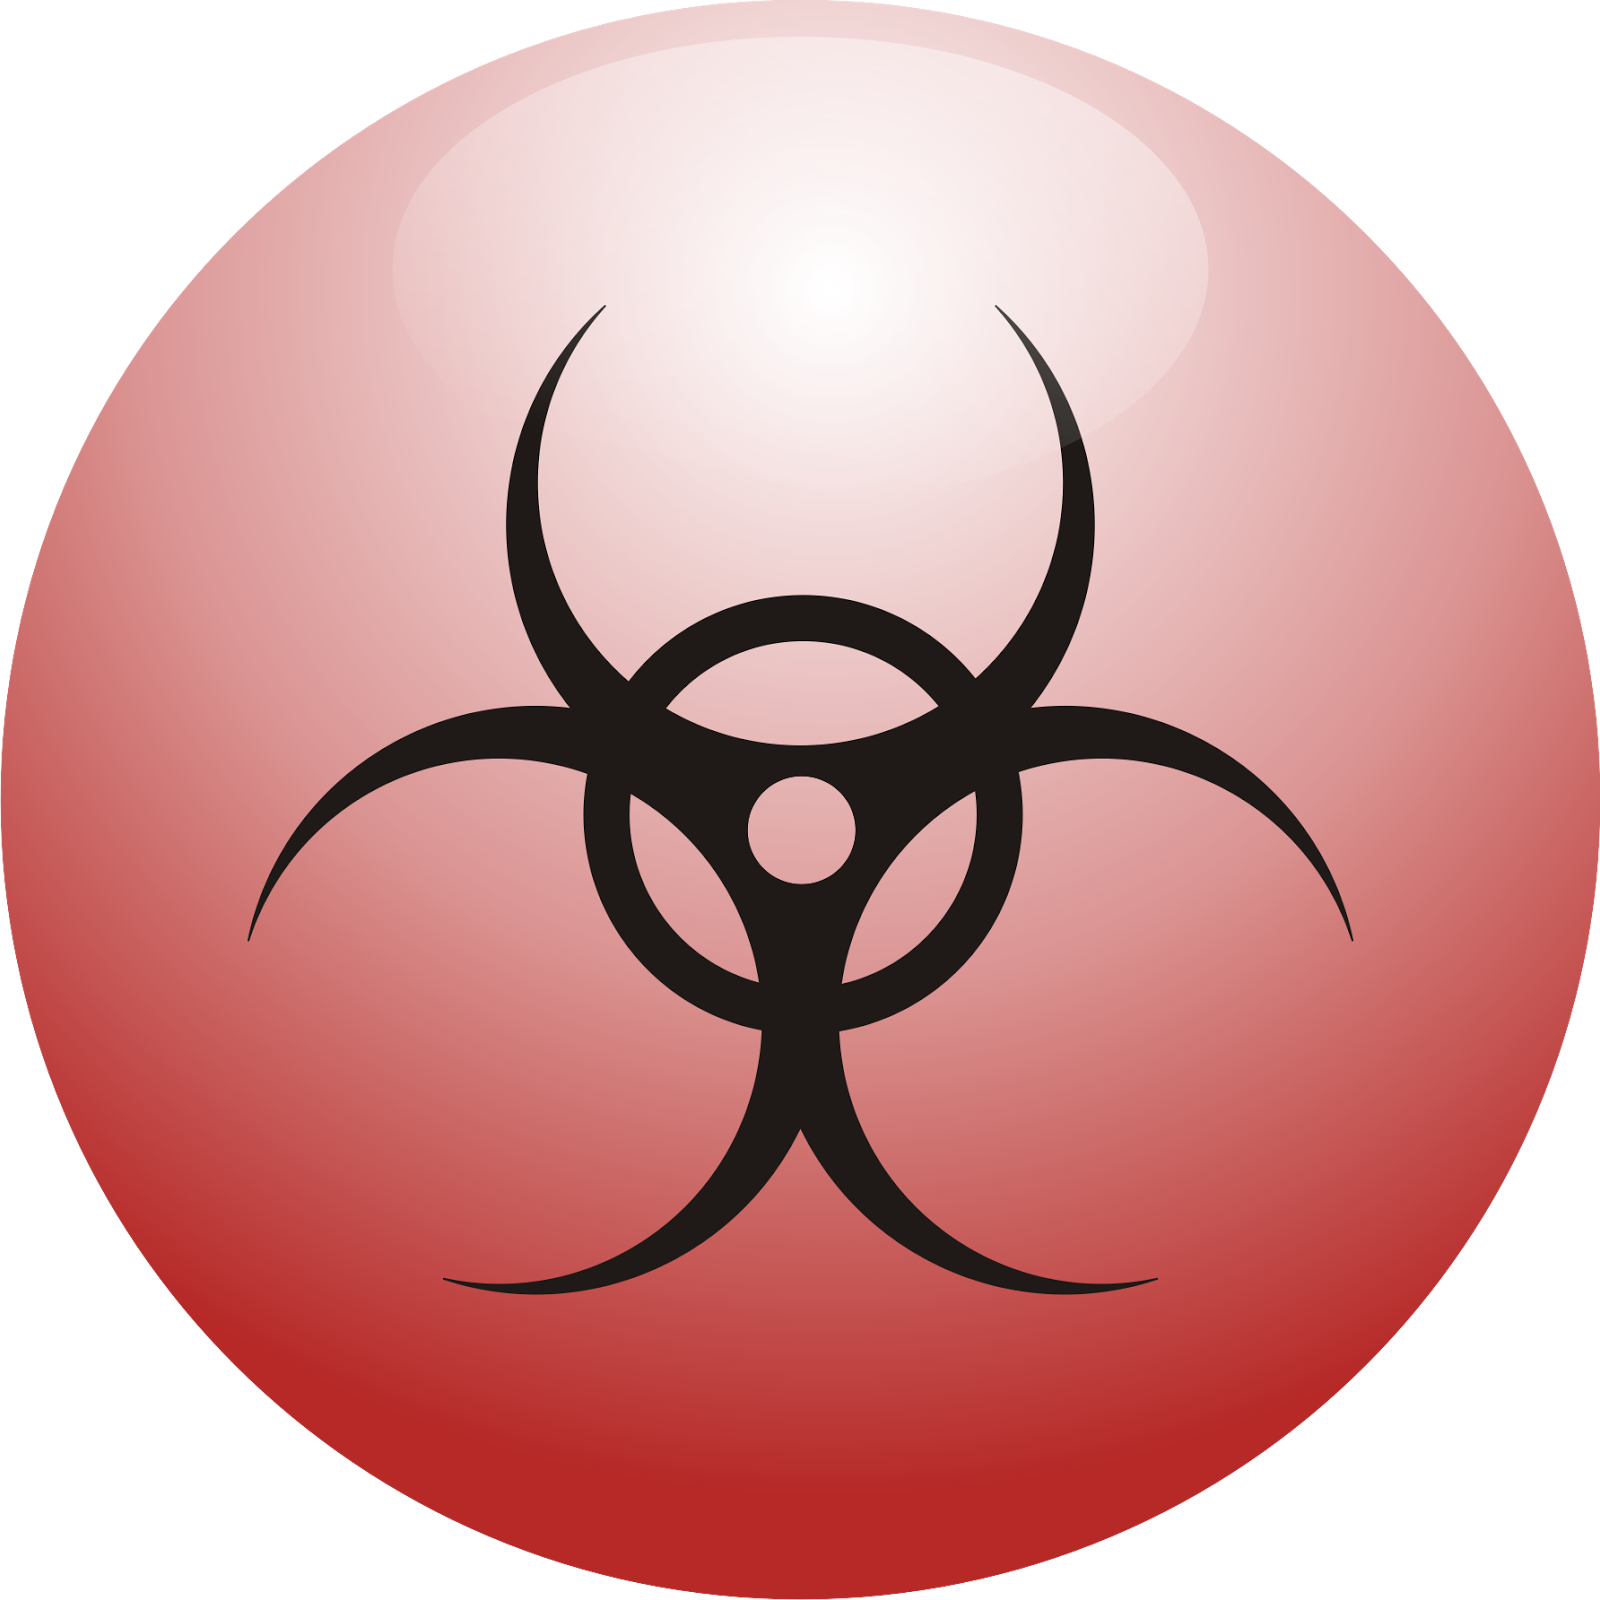 Знак распада. Знак биологической опасности. Символ биологической опасности. Значок химической опасности. Ядерный знак.